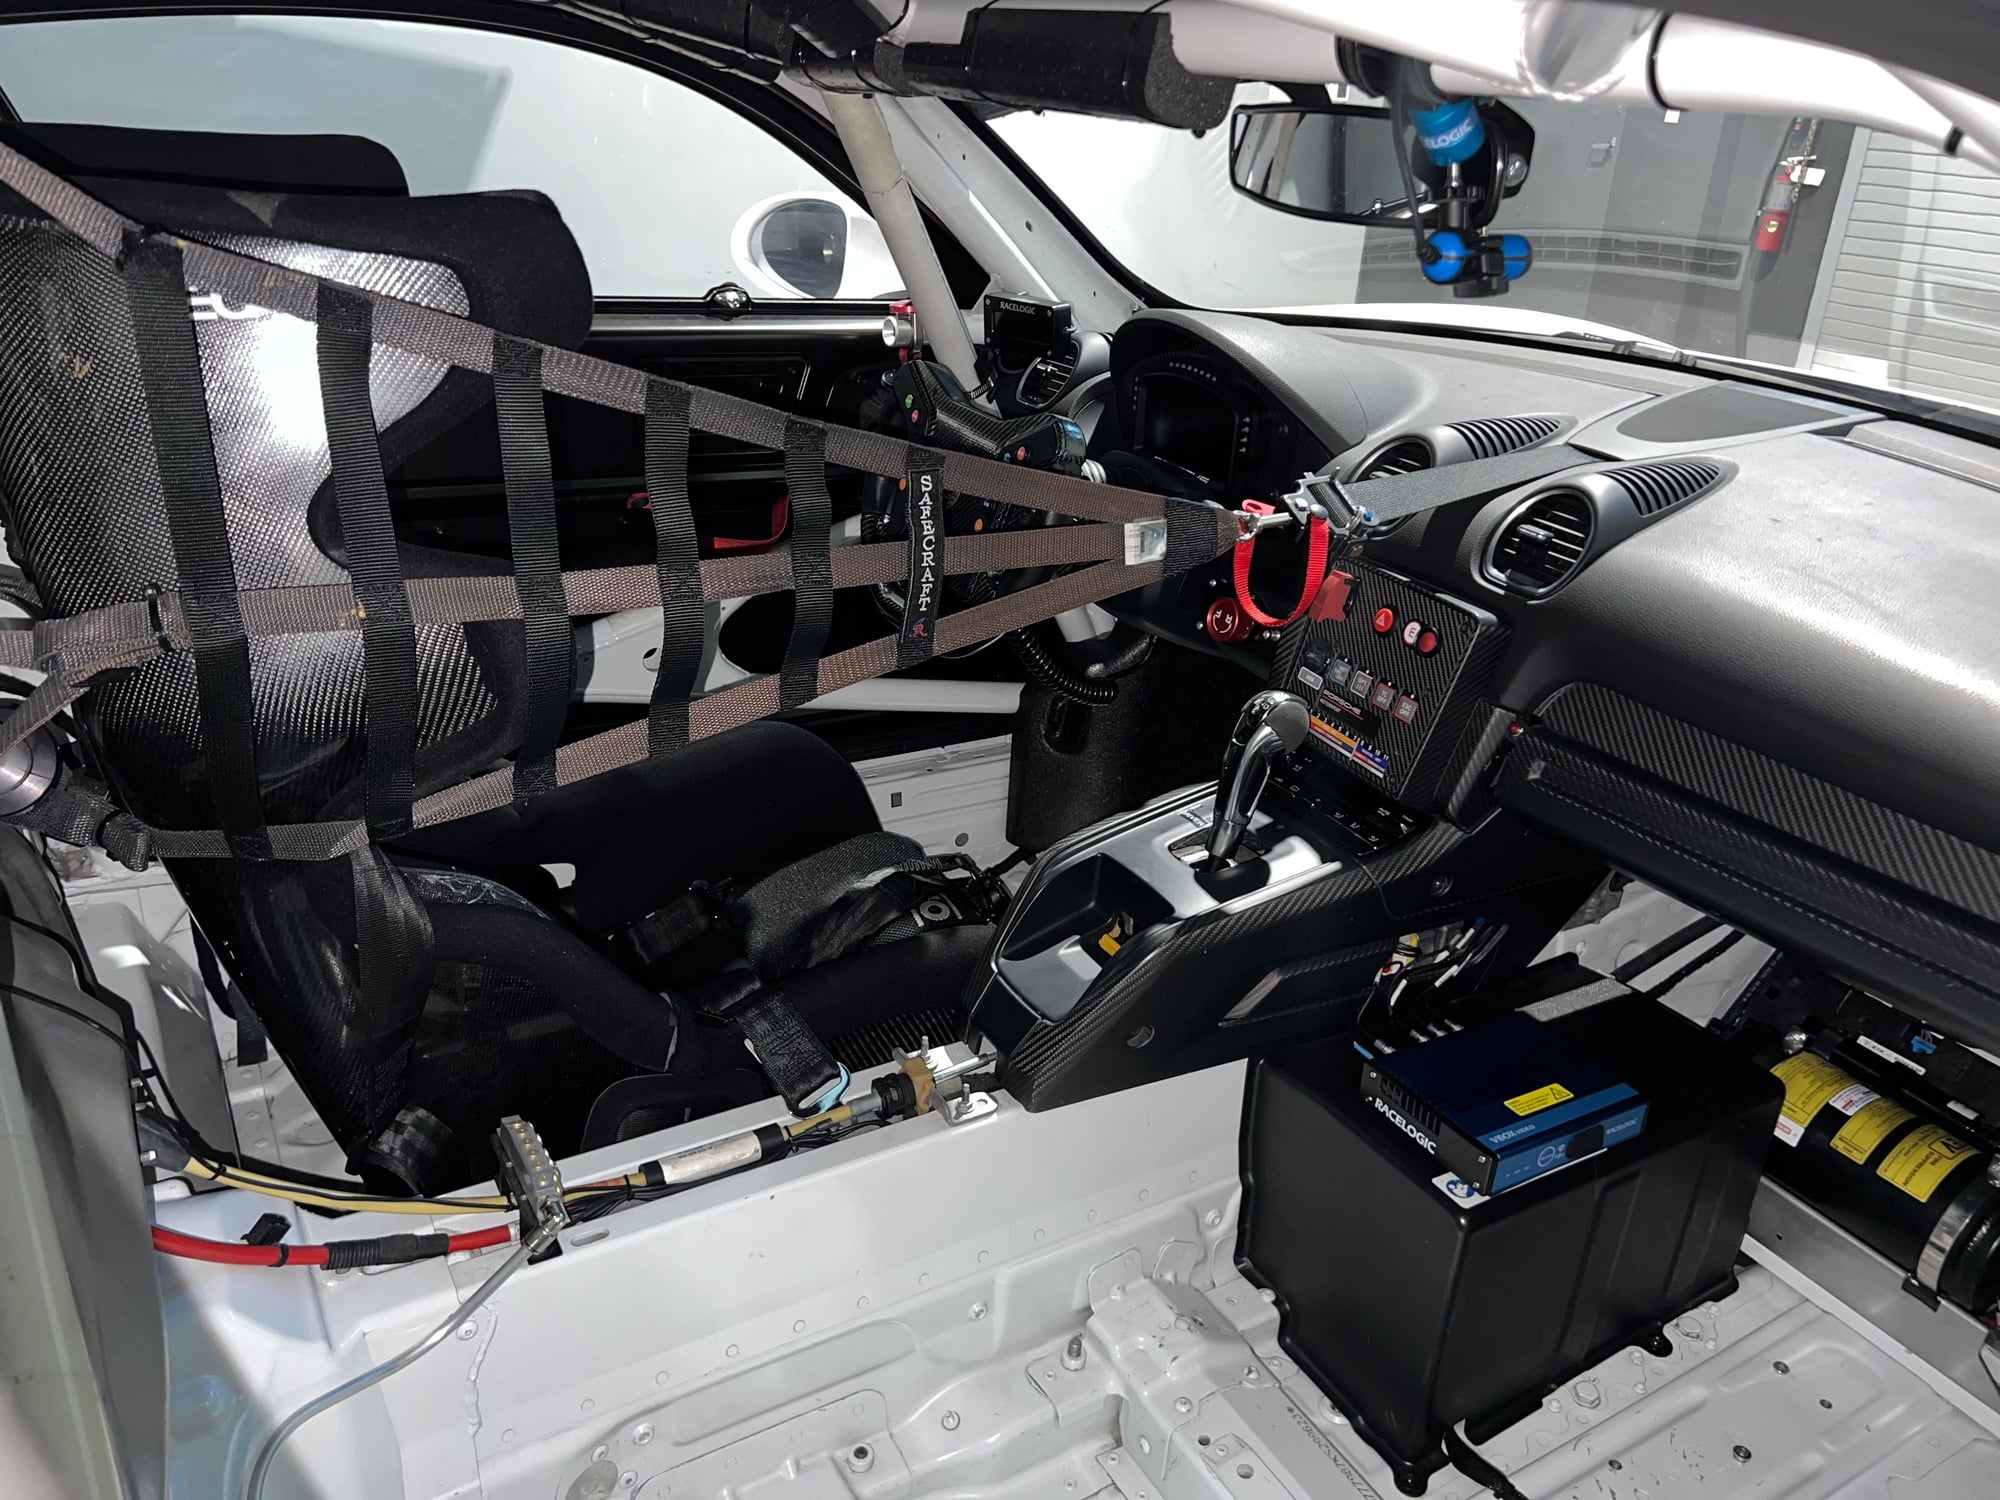 2019 Porsche Cayman GT4 - 2019 718 GT4 Clubsport MR - Used - VIN WP0ZZZ98ZKS299623 - 15,644 Miles - West Palm Beach, FL 33401, United States